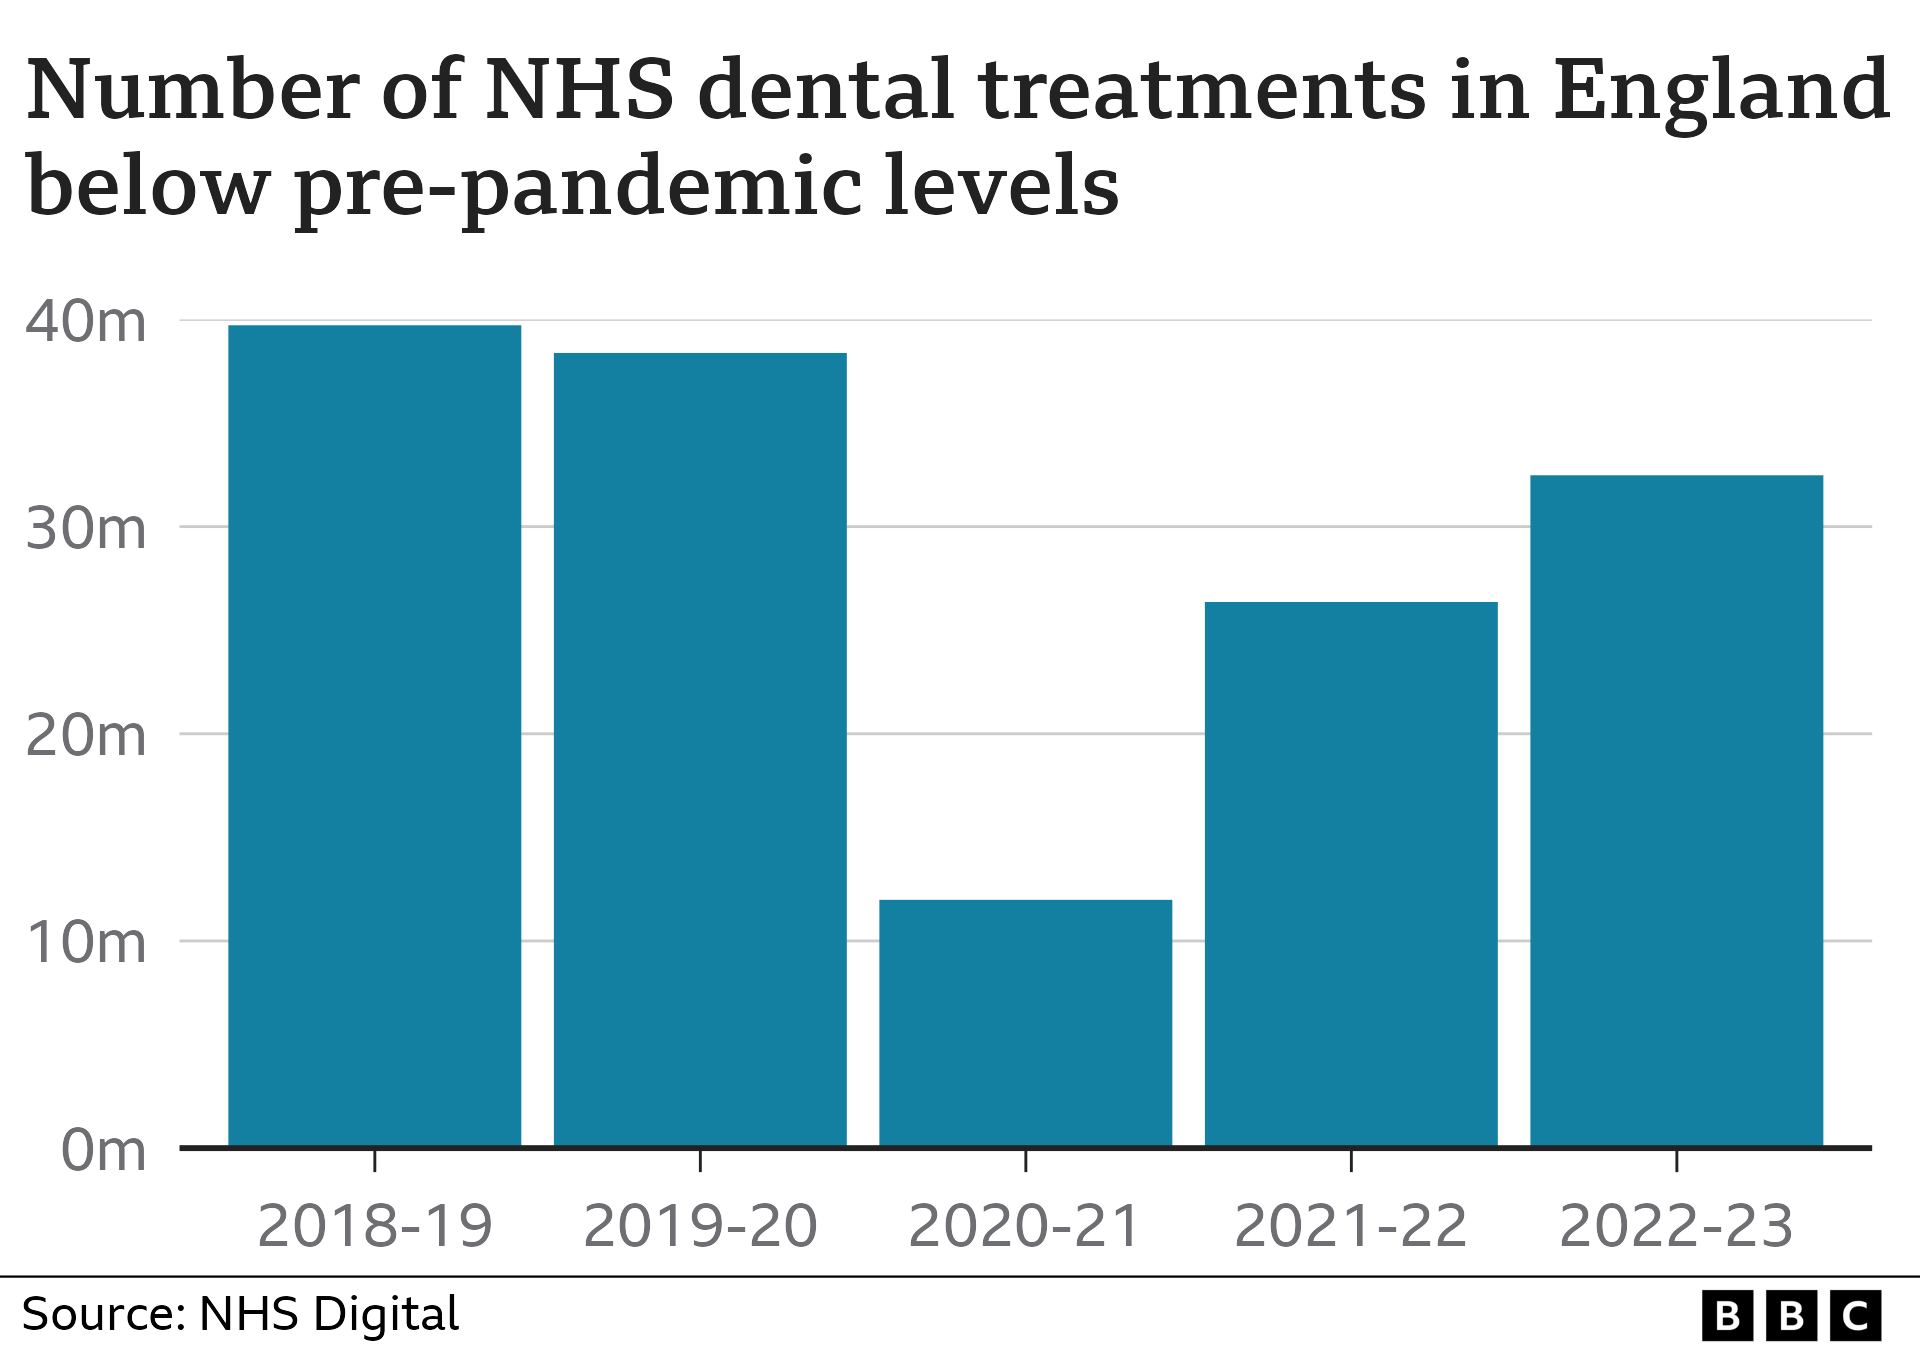 Number of NHS dental treatments in England below pre-pandemic levels